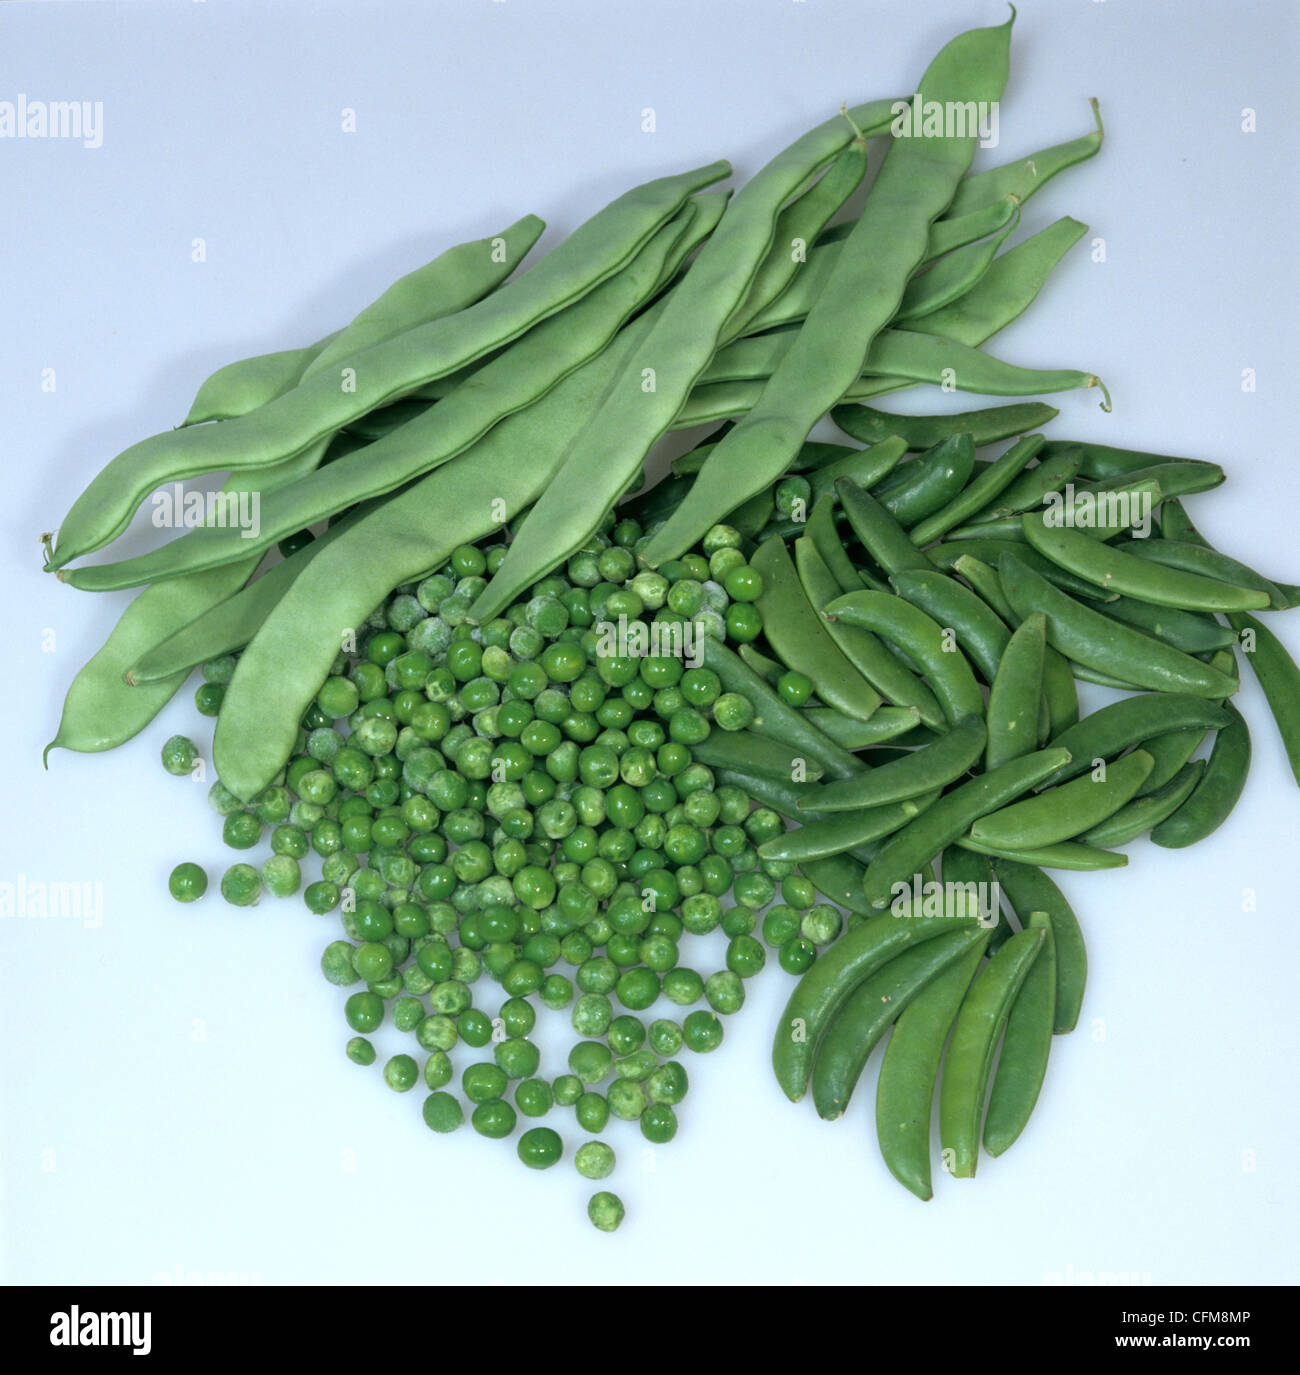 Peas, flat beans, sugar snap peas, snow peas, supermarket vegetables Stock Photo